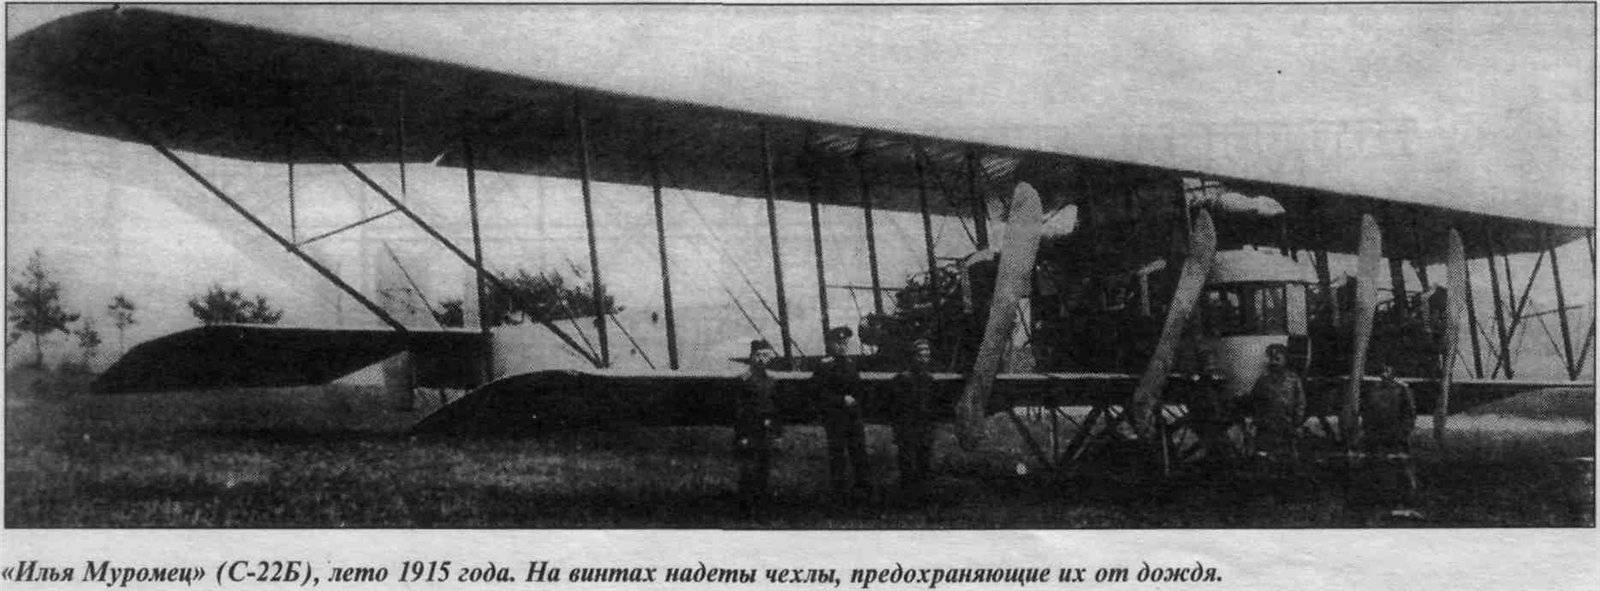 Илья муромец (самолёт) — википедия с видео // wiki 2